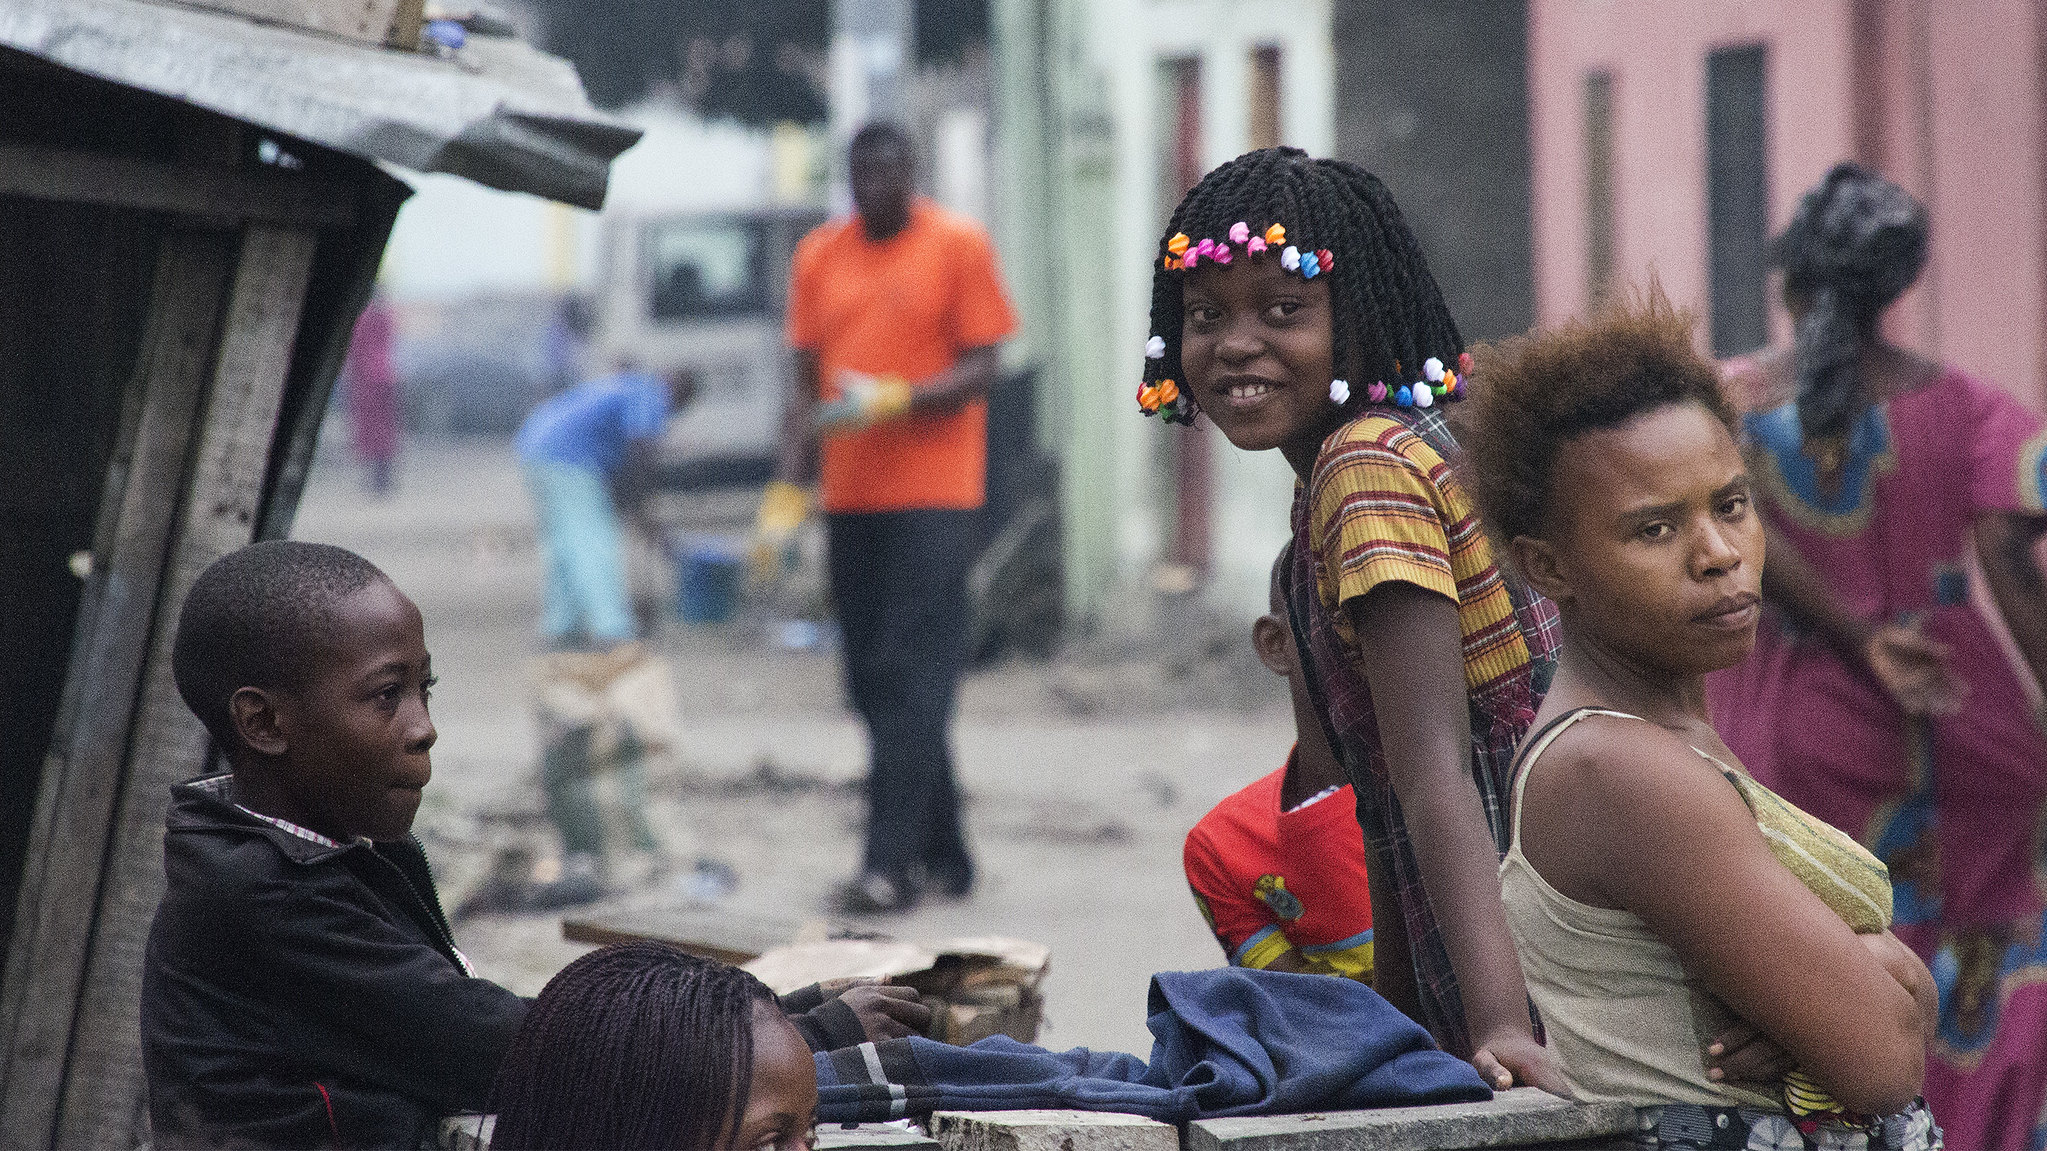 Kinshasa street scene. Photo by Steve Evans, CC BY-NC-ND 2.0 license